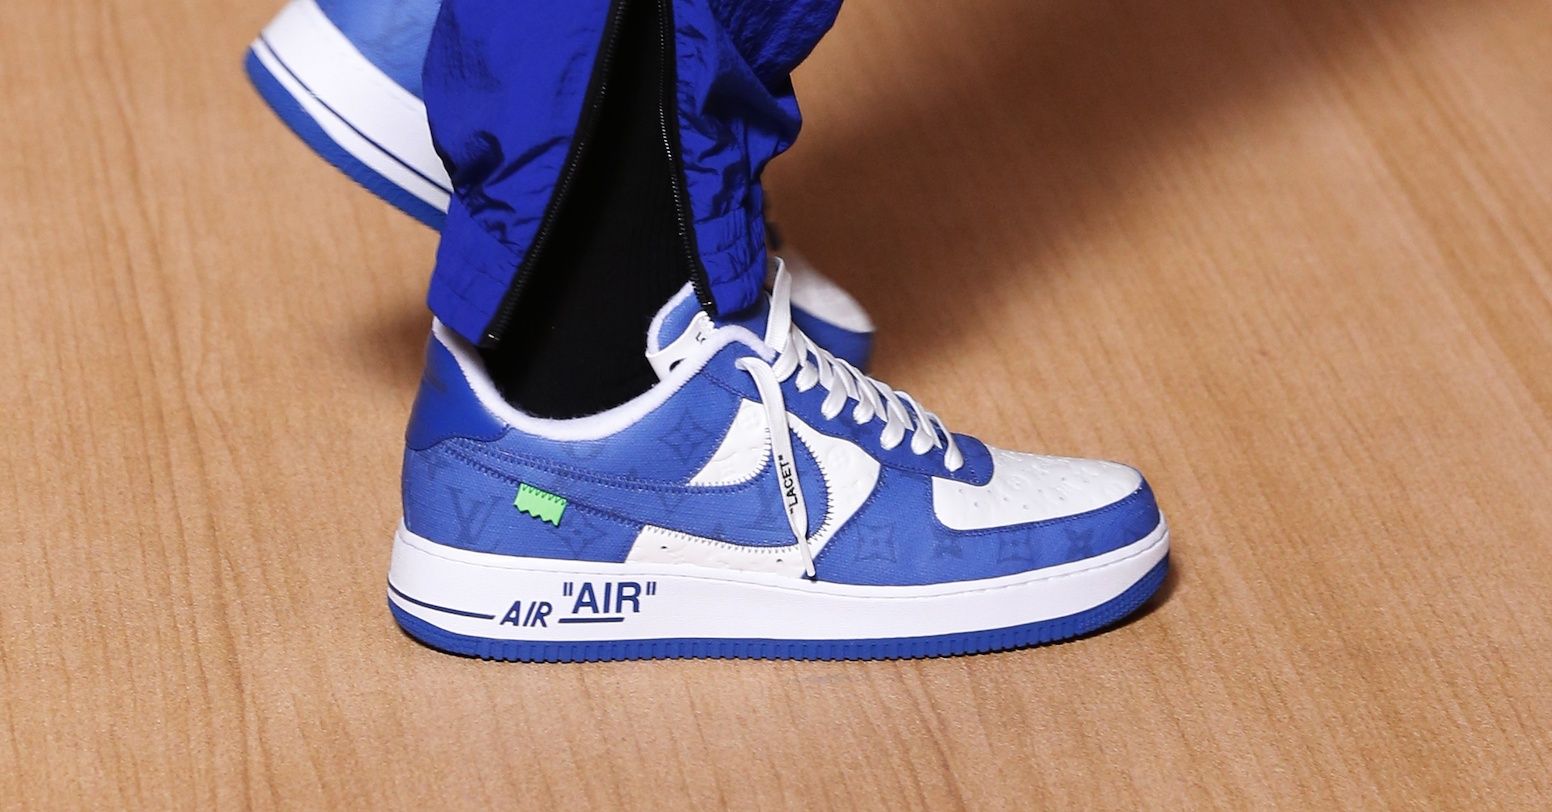 Nike louis vuitton nike air force 1 shoes x Louis Vuitton: first look at the Air Force 1 sneakers by